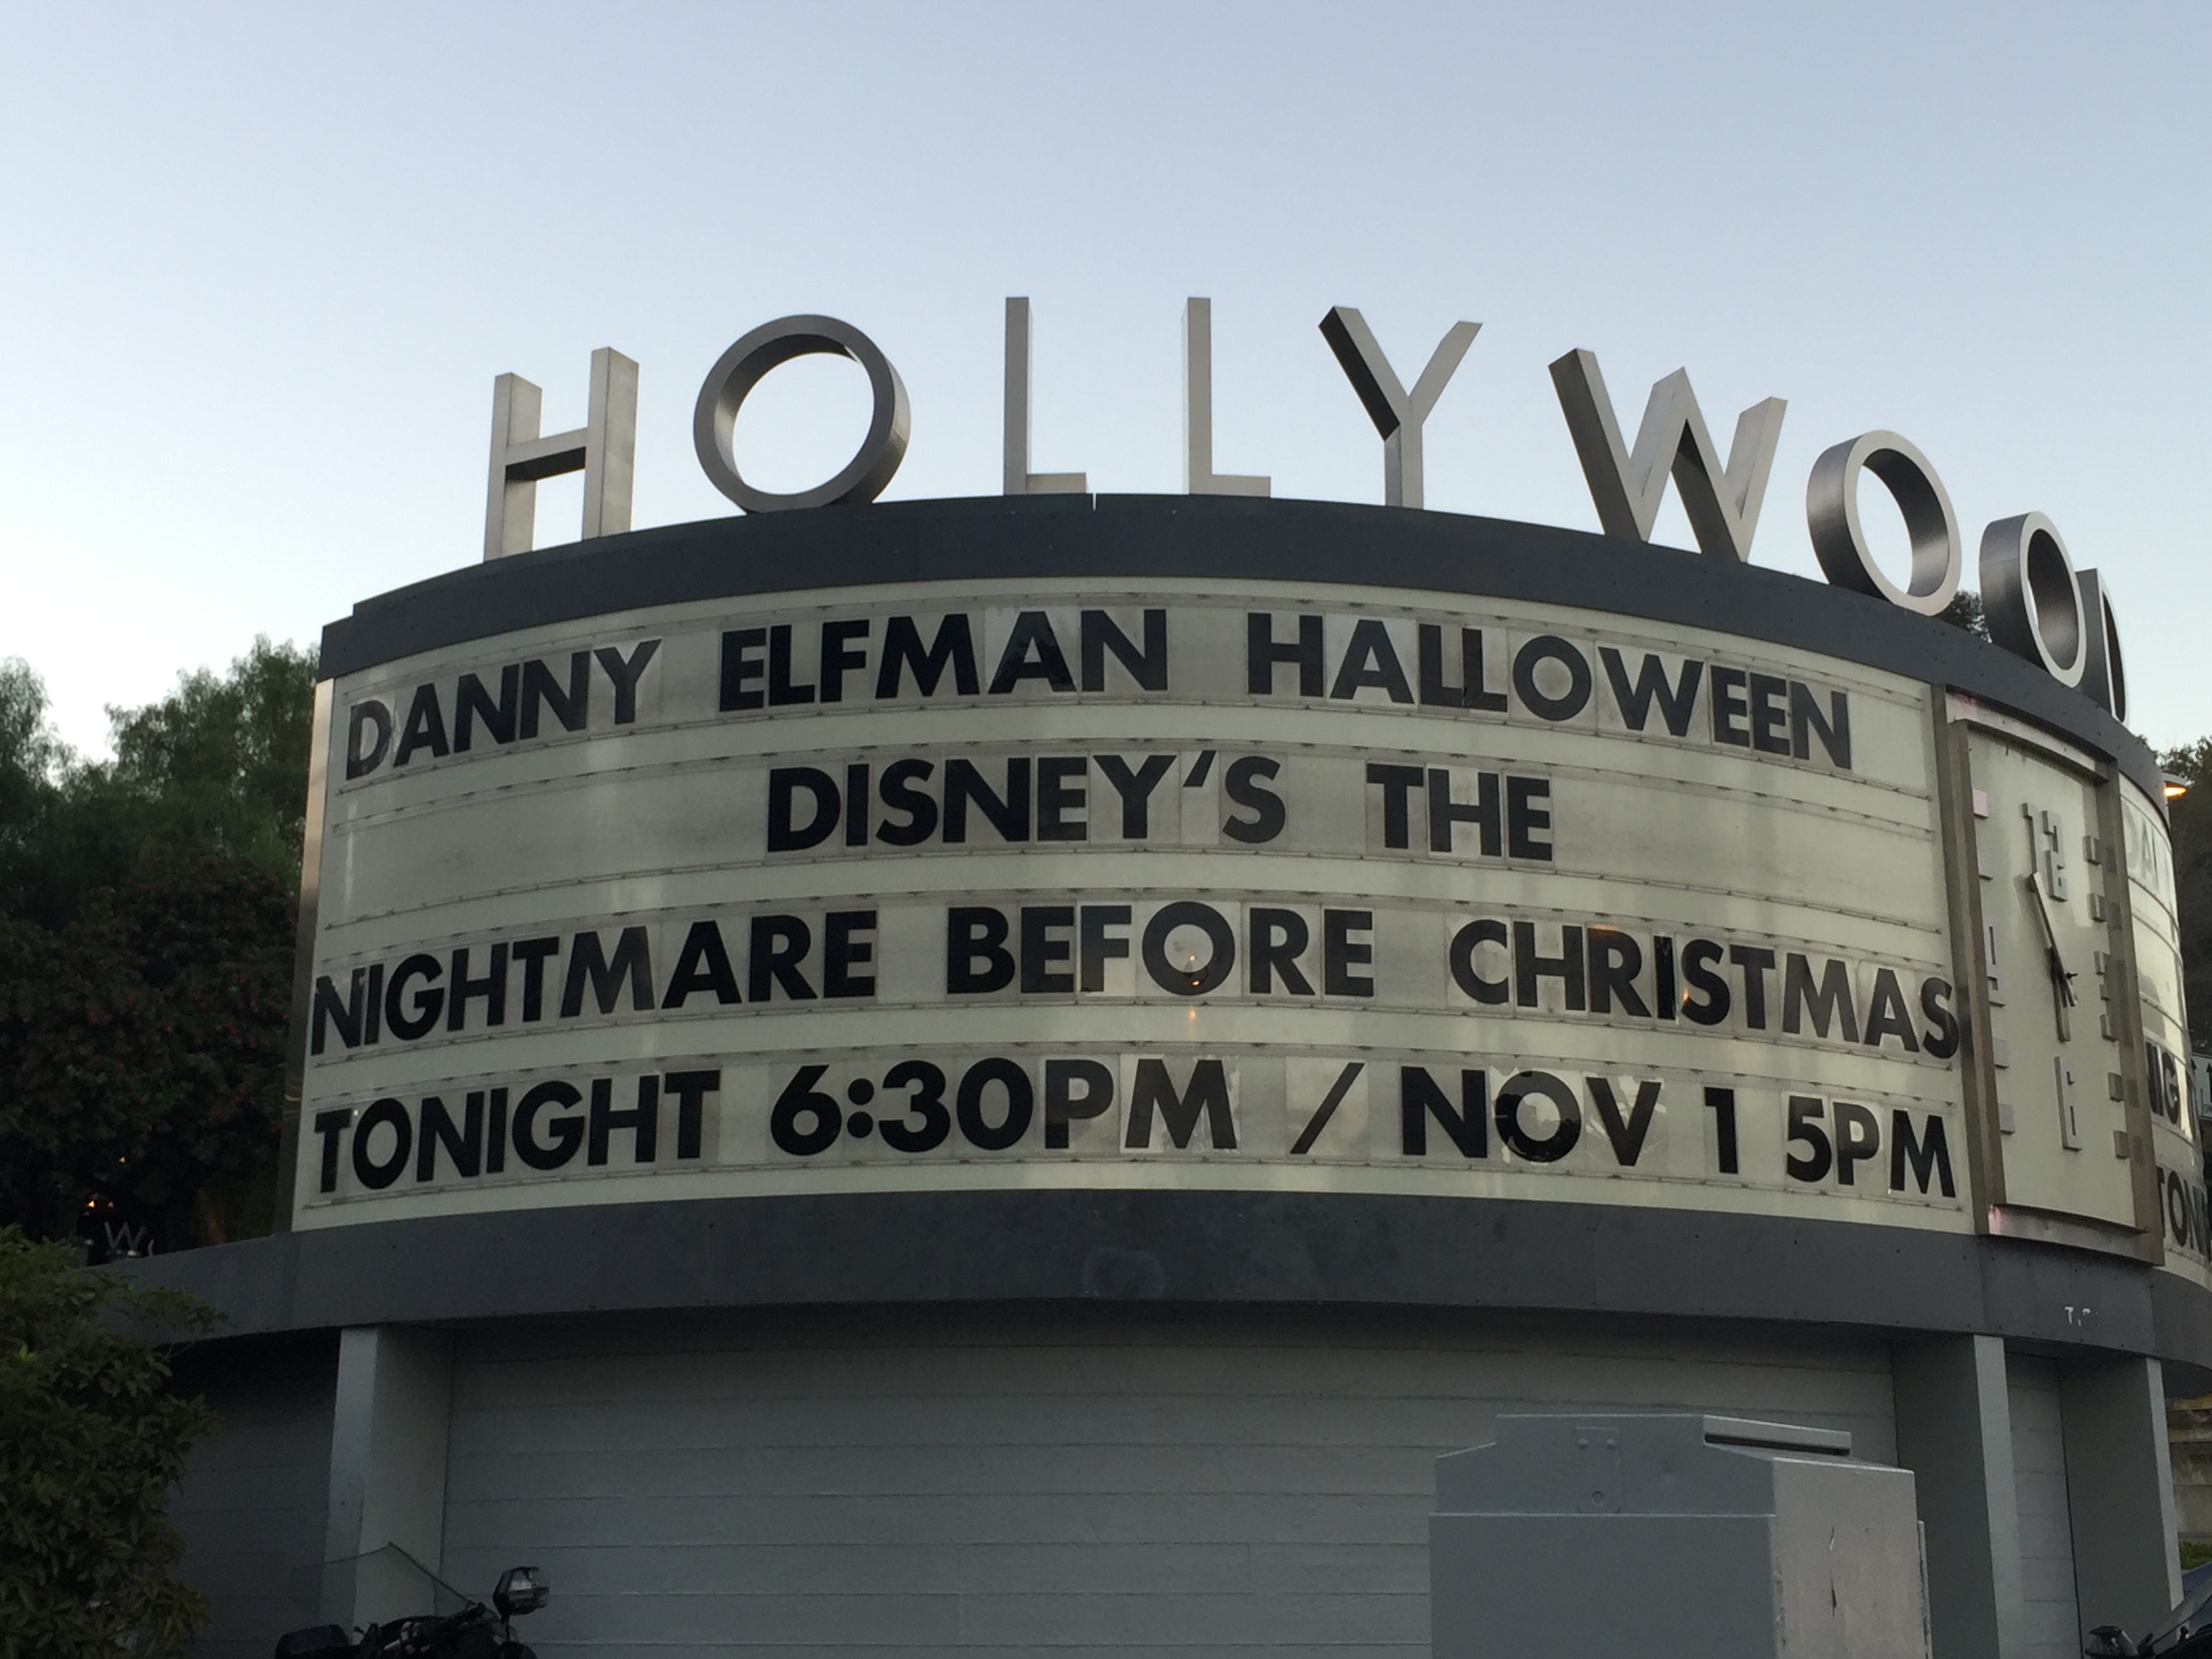 A Far from Nightmarish Evening with Danny Elfman